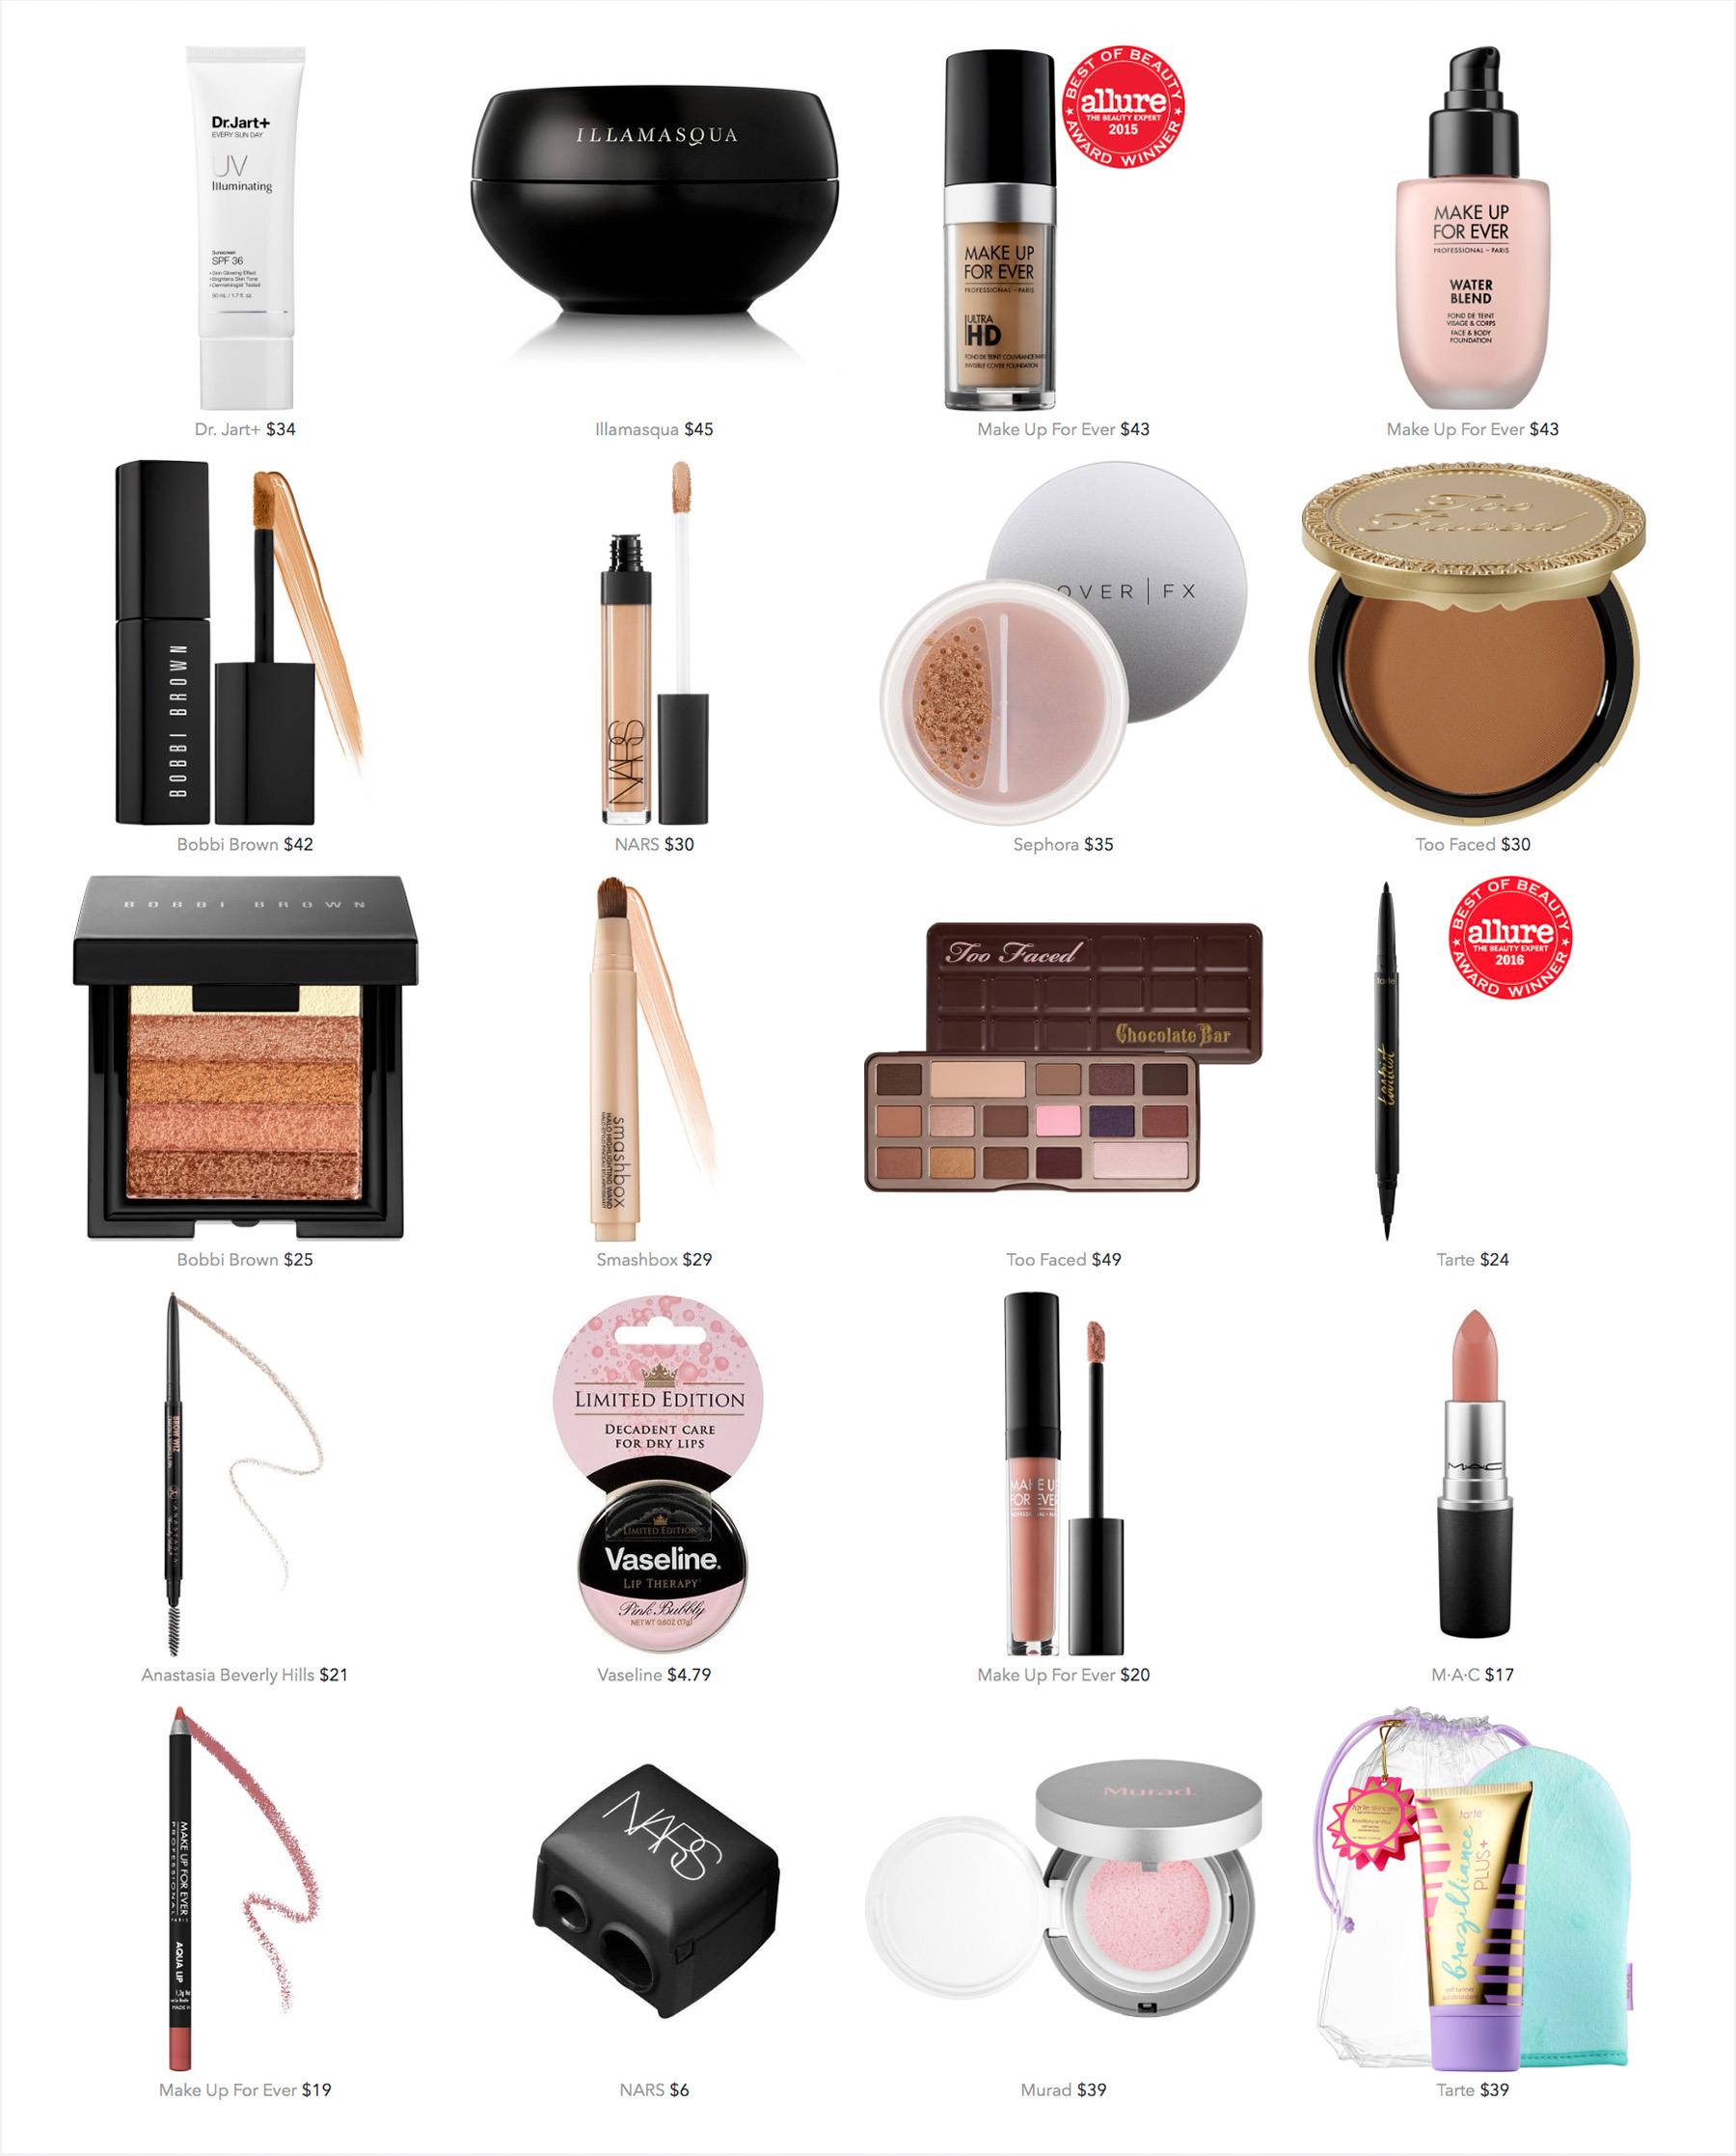 20 Beauty Products I Swear By // NotJessFashion.com